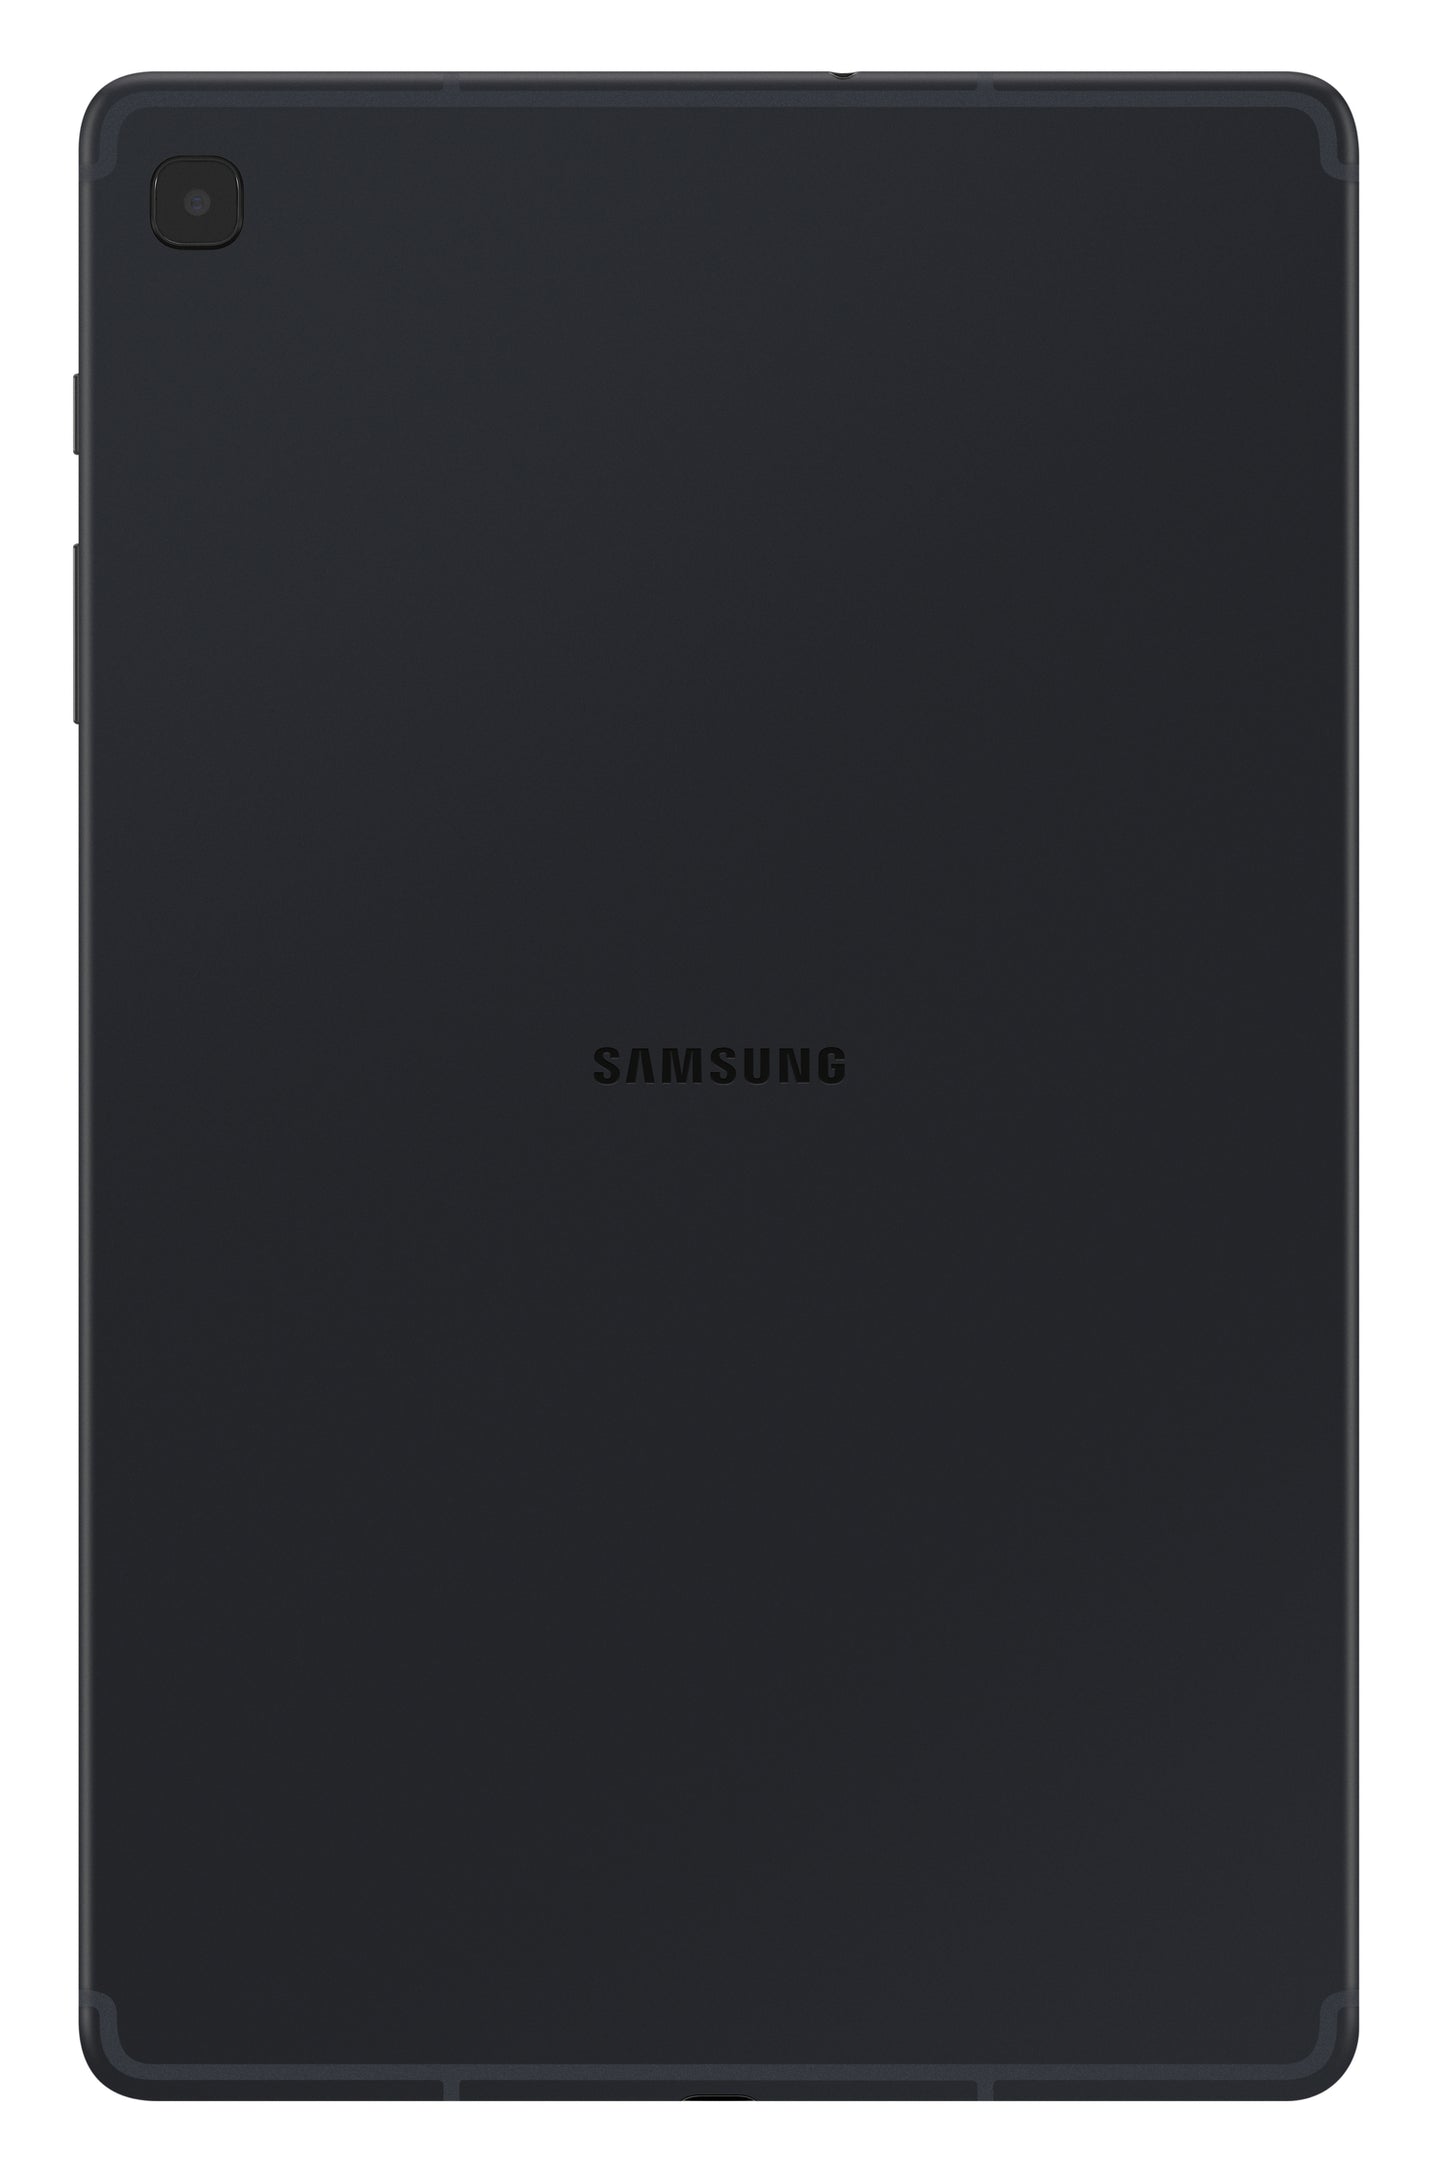 (Open Box) Samsung Galaxy Tab S6 Lite Wi-Fi 128GB 10.4-in Tablet - Oxford Gray